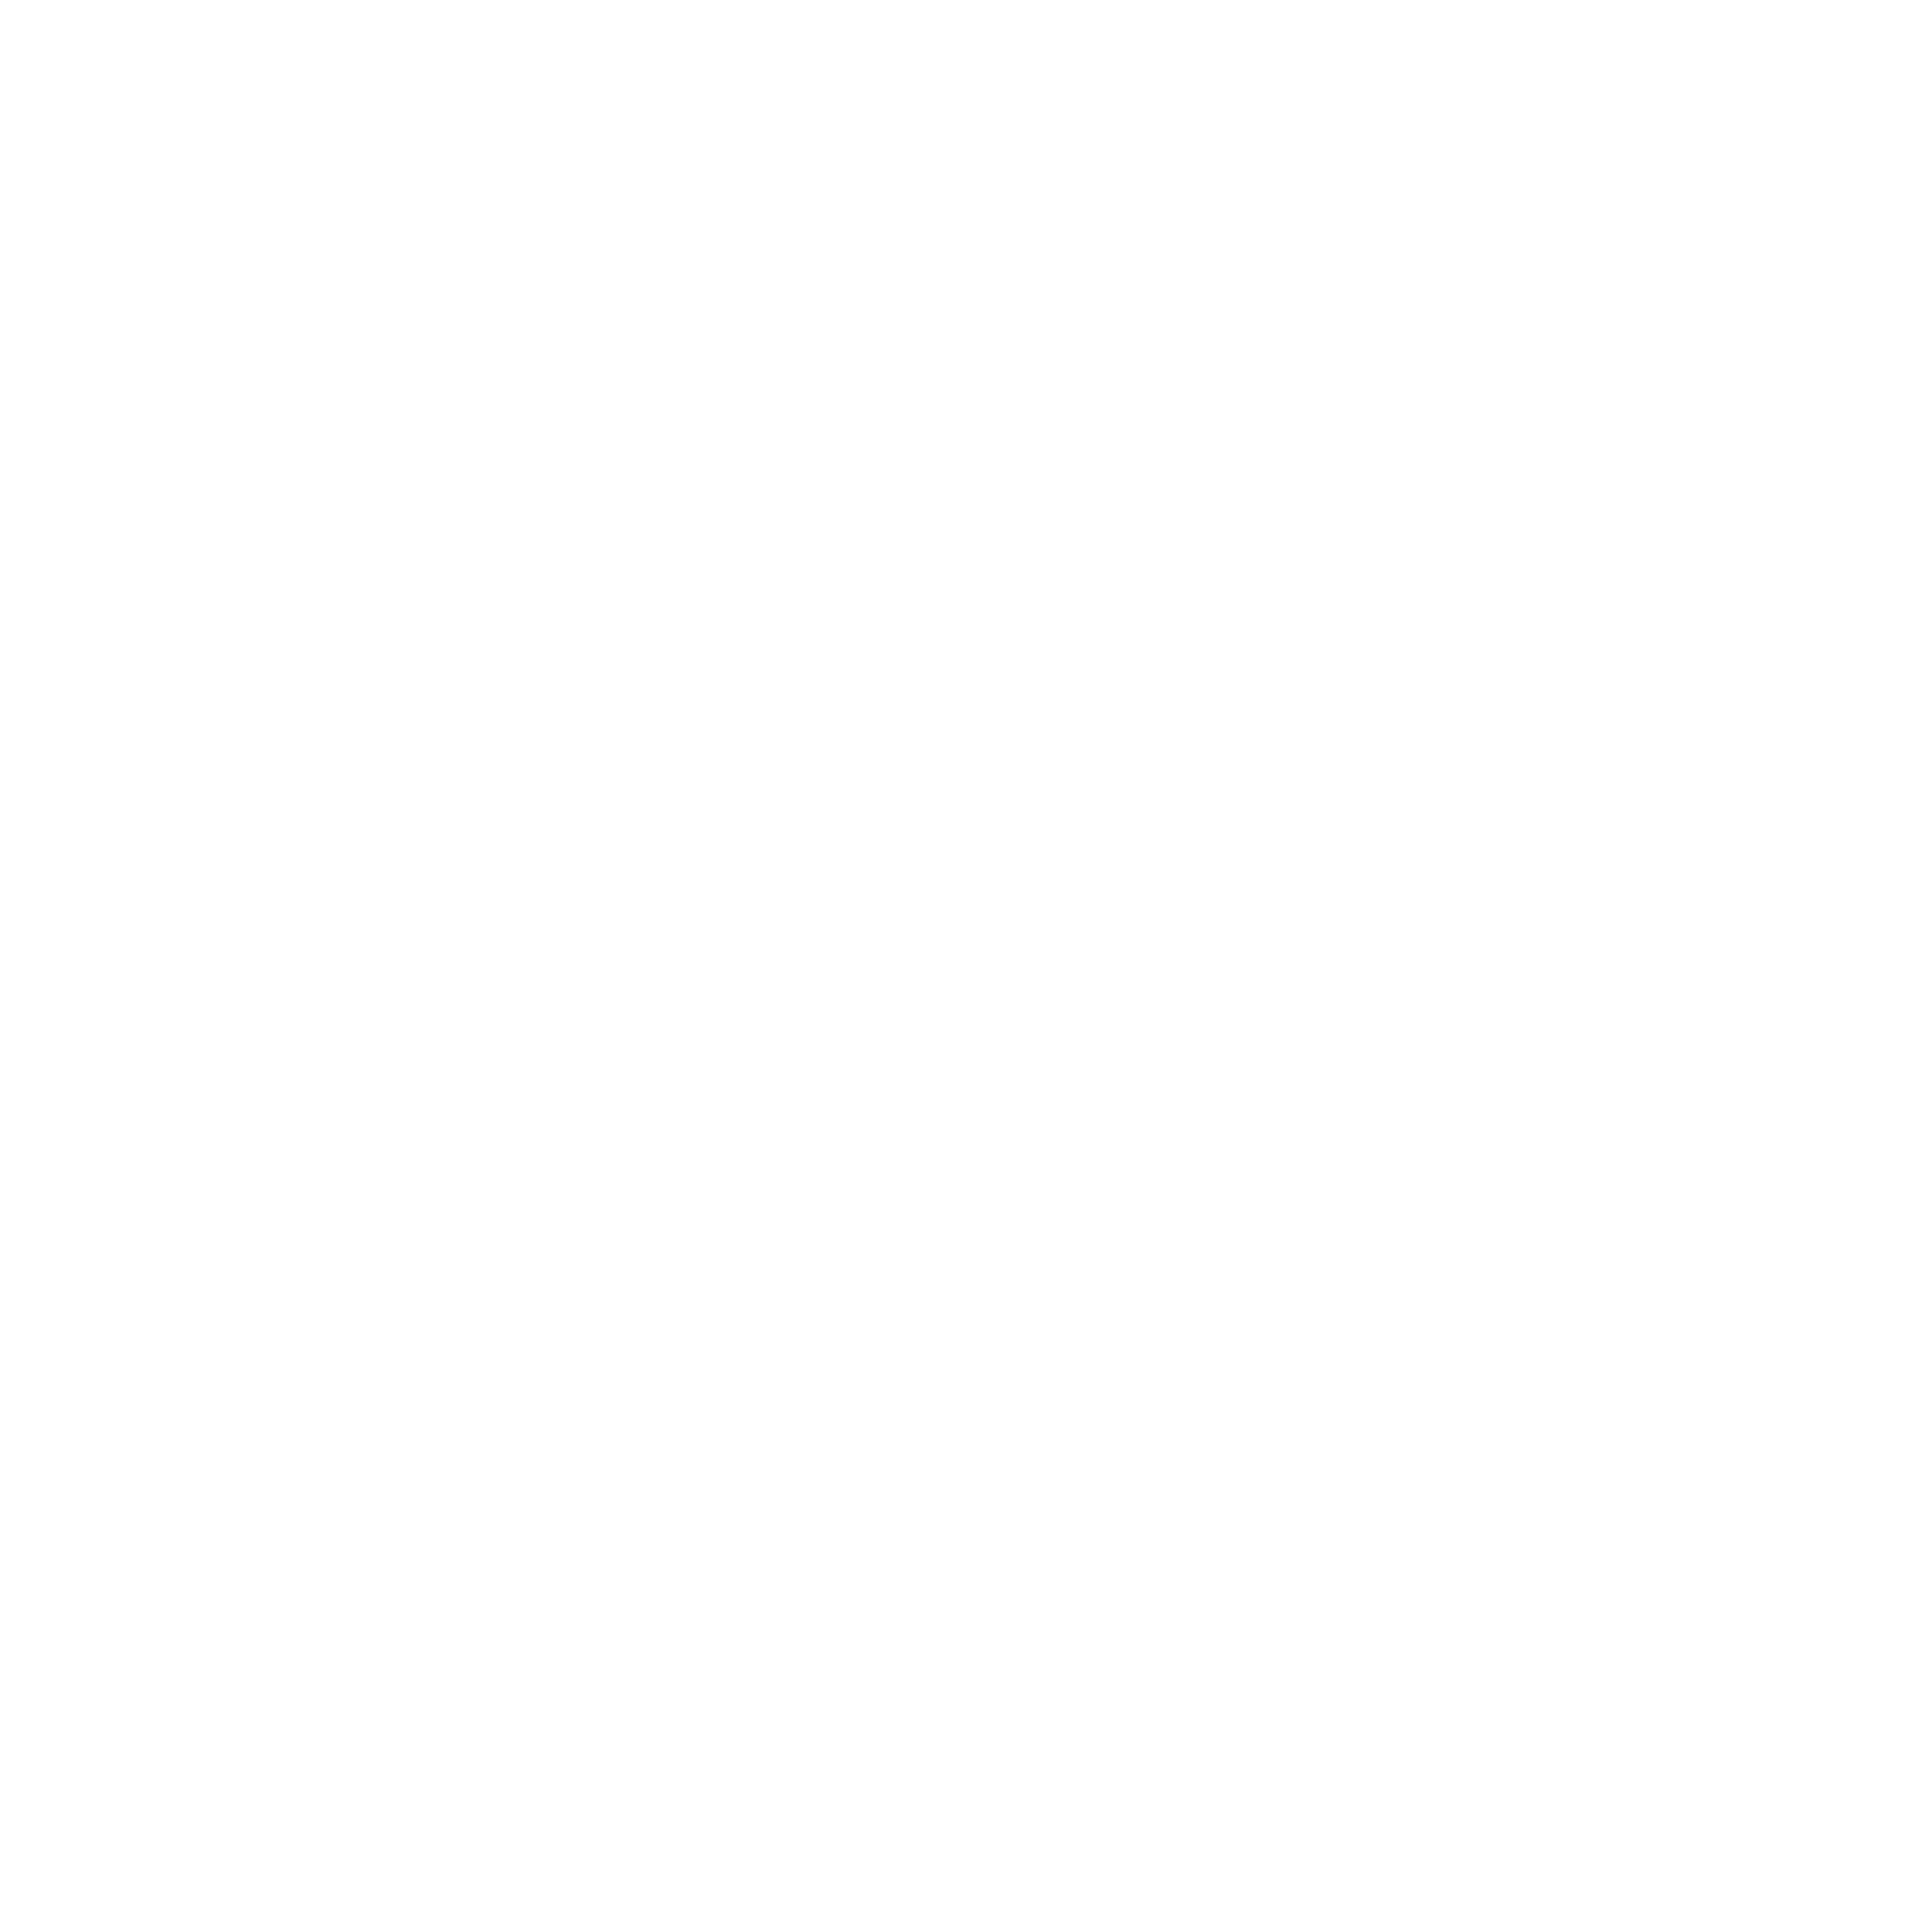 Kayabros